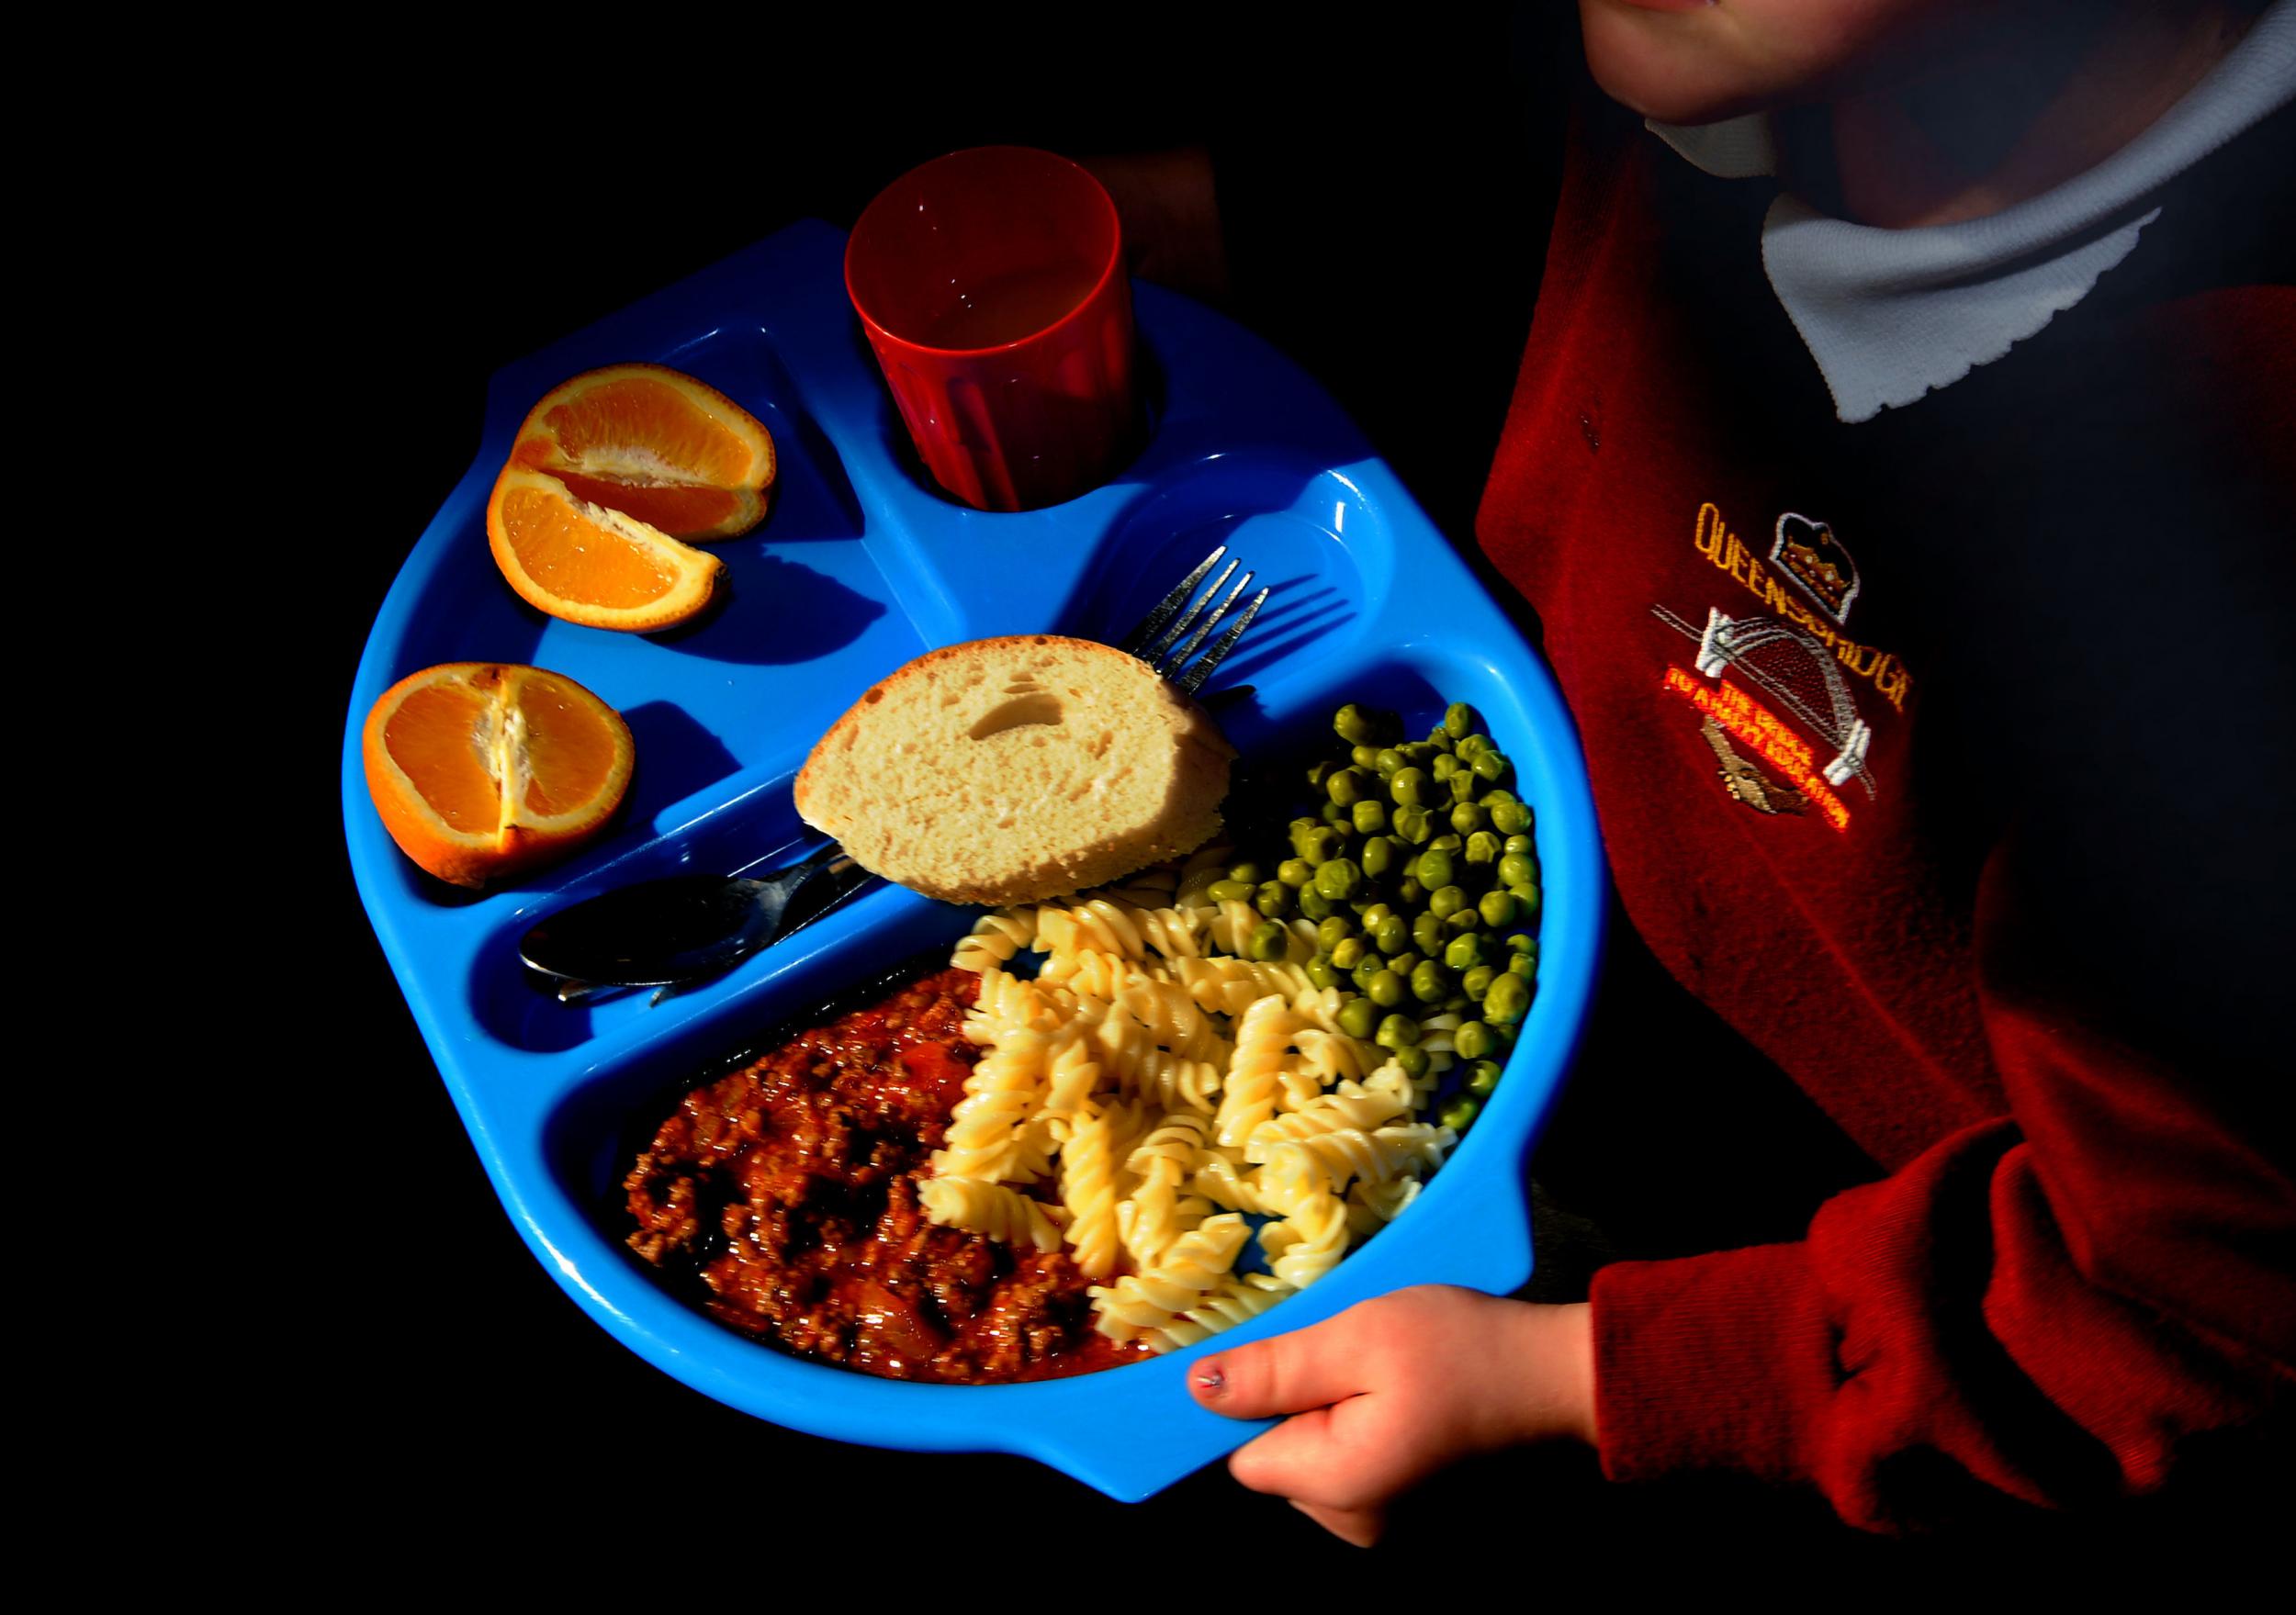 Around 1.3 million children need access to free school meals amid lockdownAround 1.3 million children need access to free school meals amid lockdown